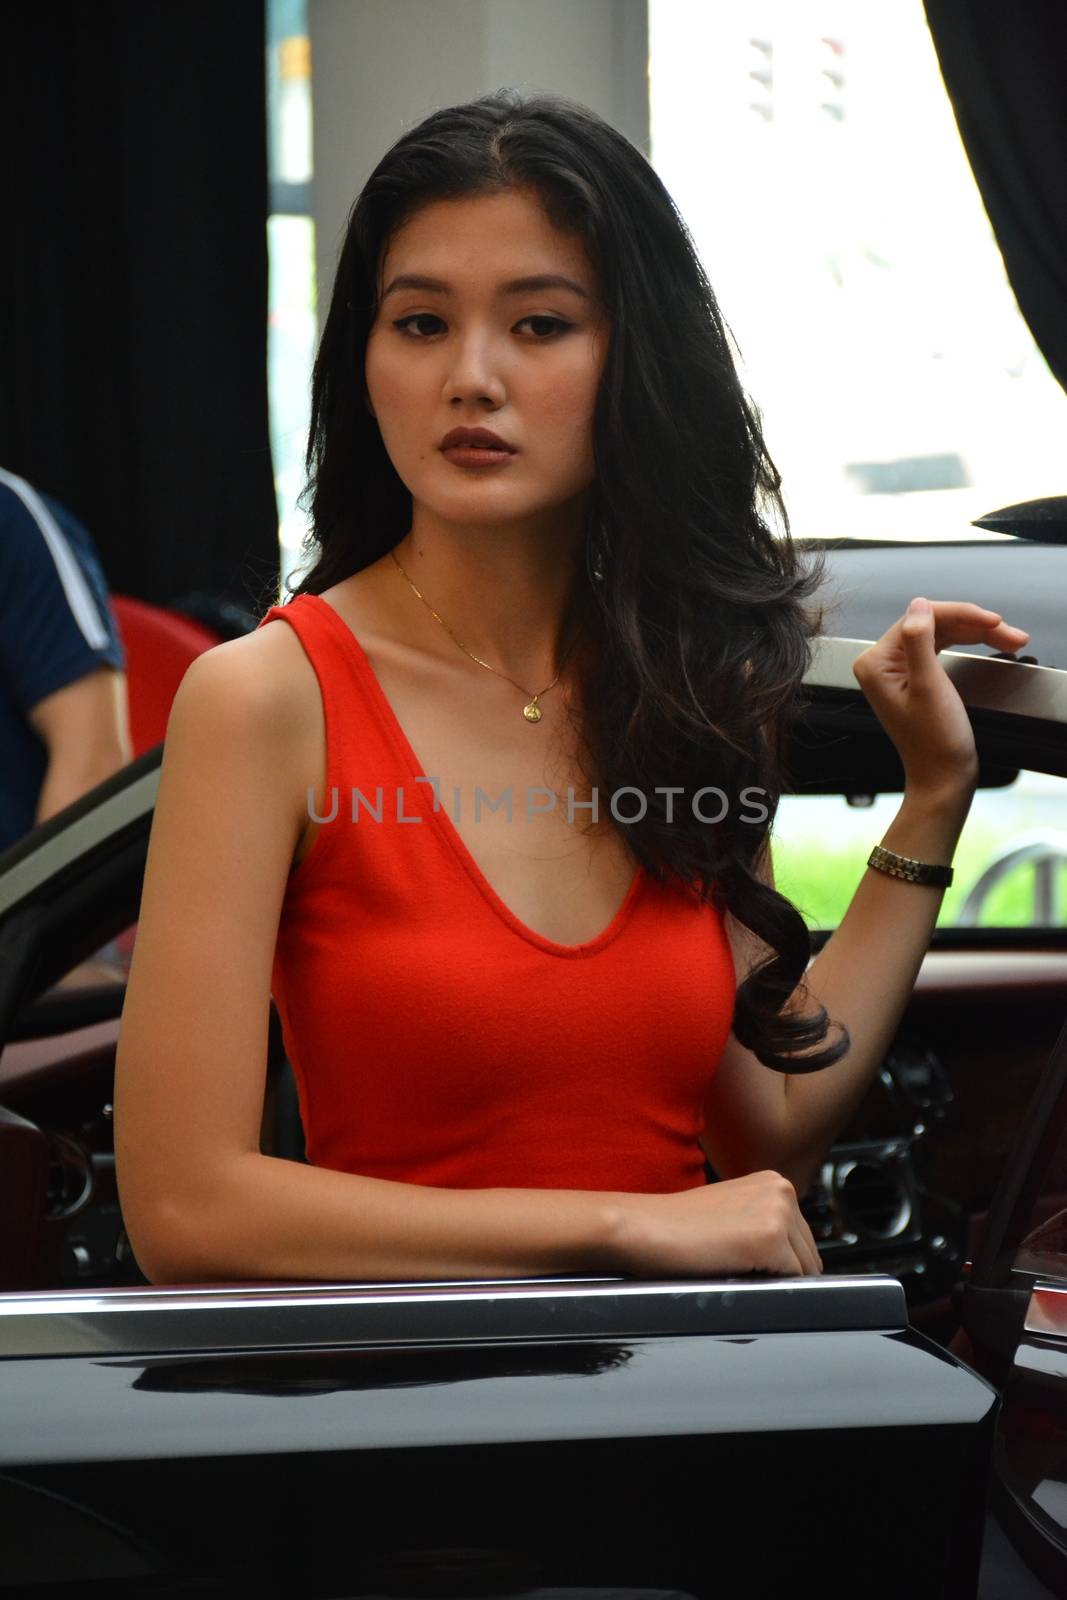 TAGUIG, PH - JULY 13 - Rolls Royce female model at Rolls Royce car showroom on July 13, 2019 in Bonifacio Global City, Taguig, Philippines.